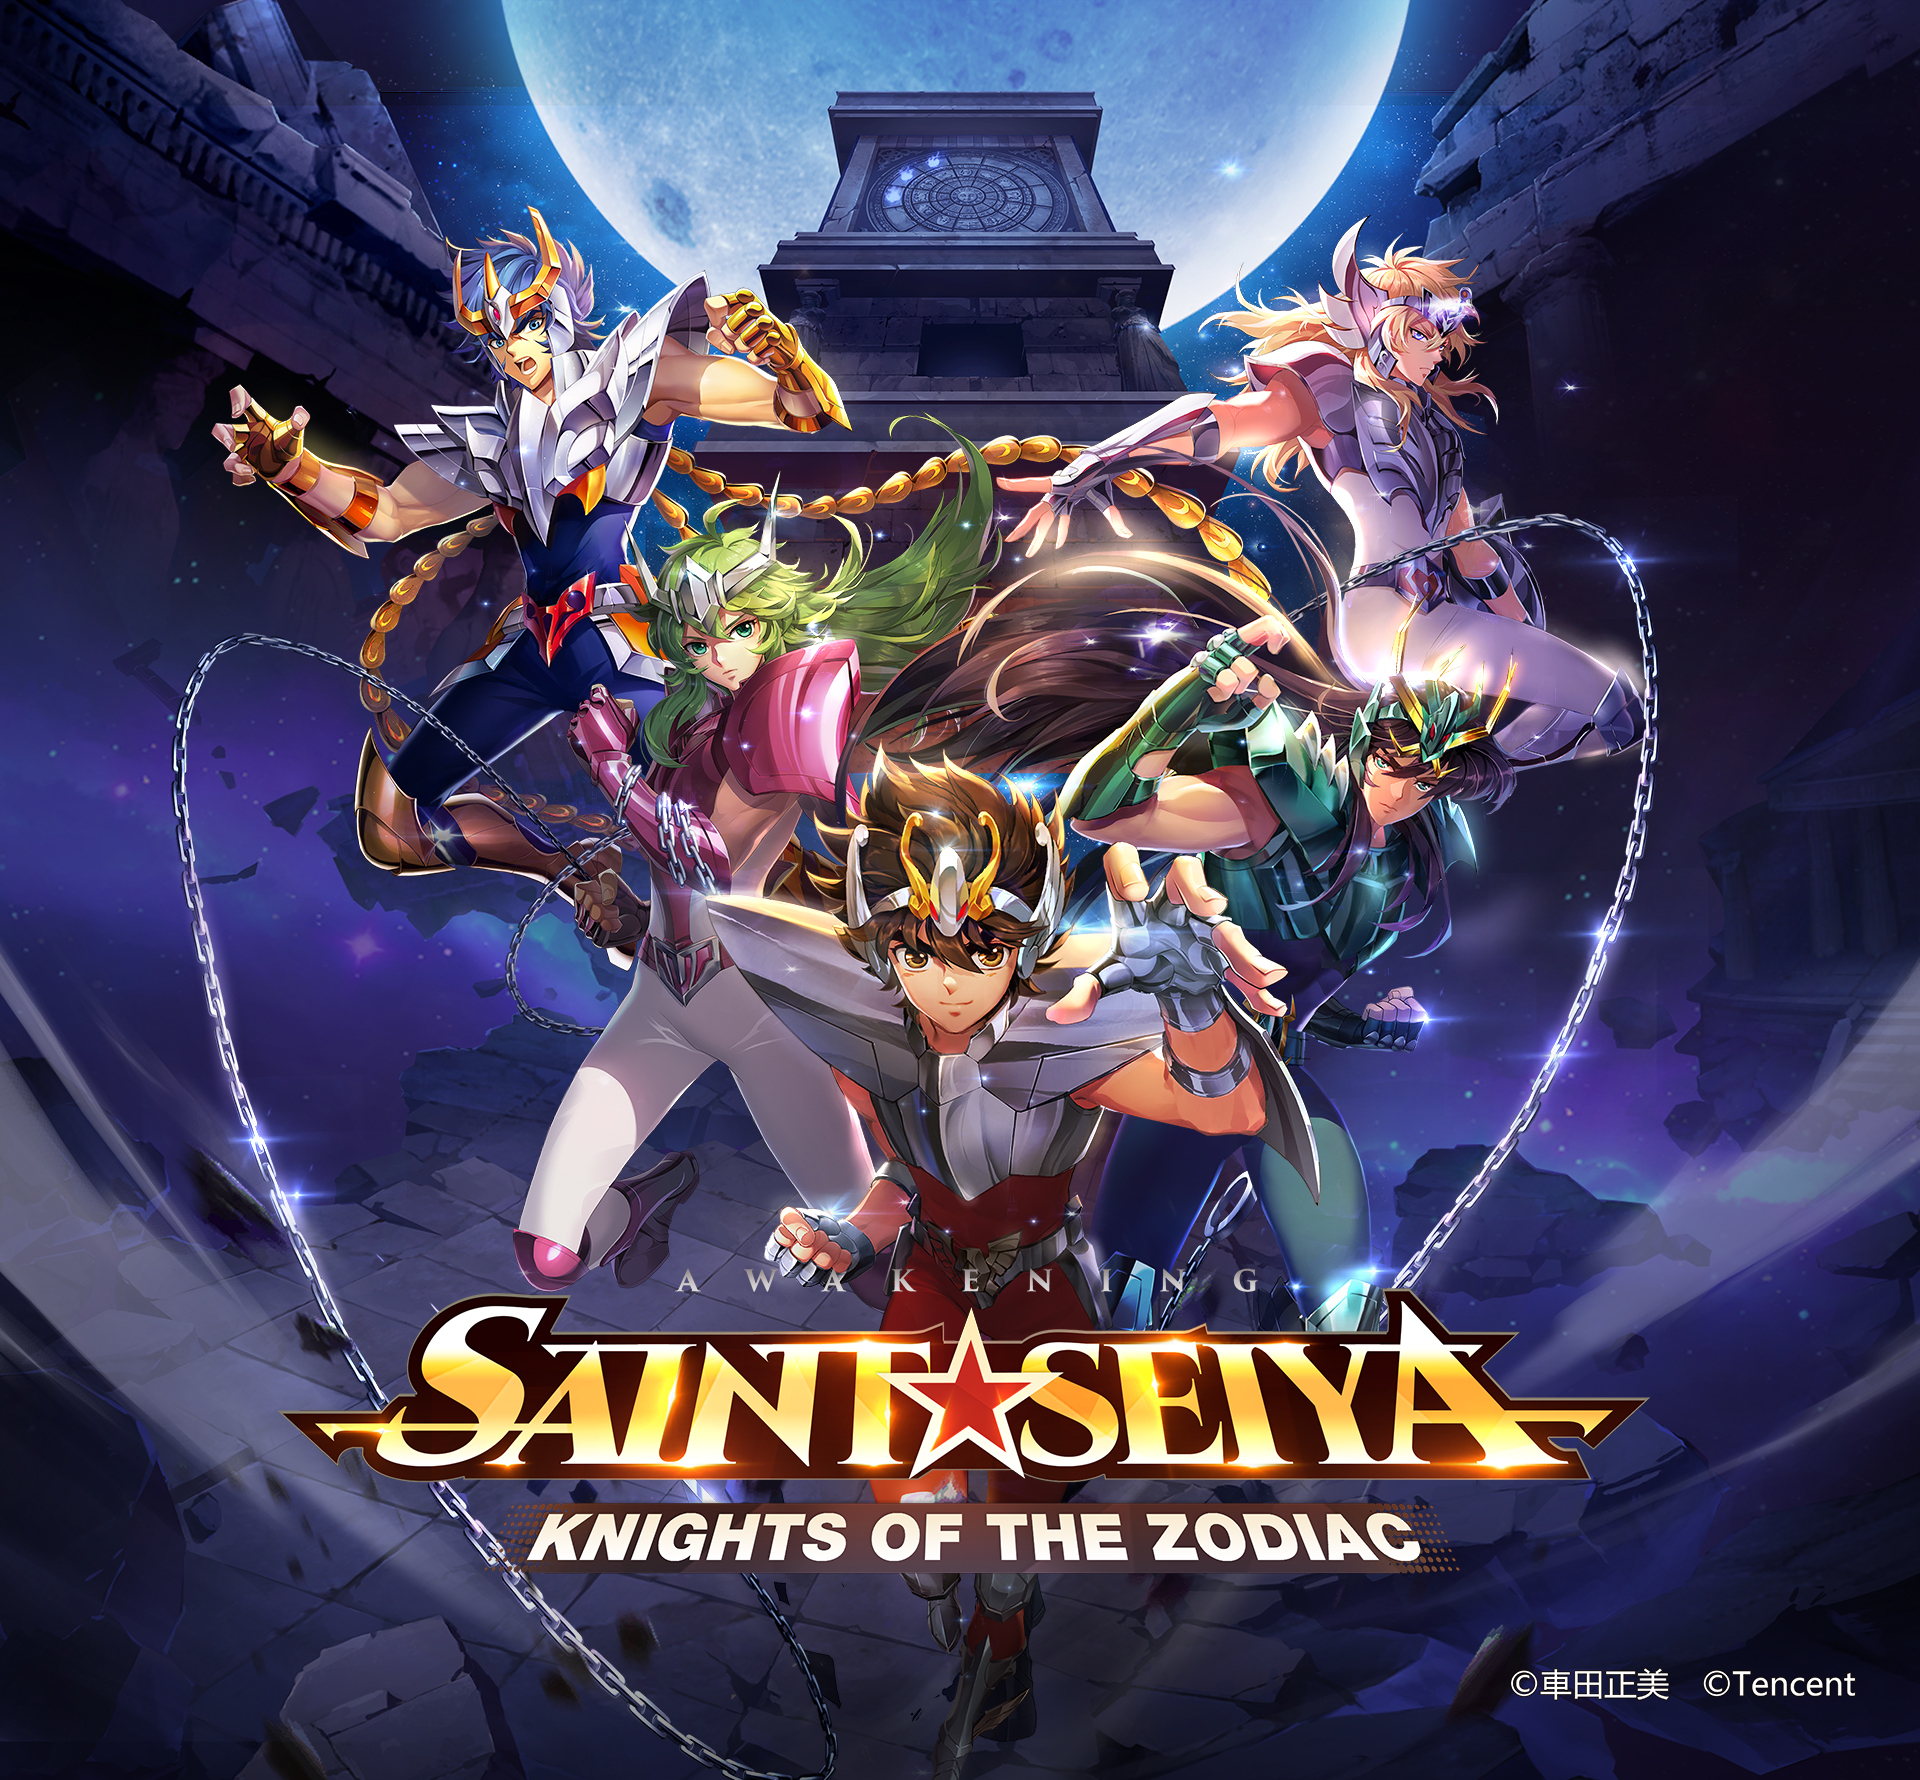 Saint Seiya Awakening Knights of the Zodiac grandi festeggiamenti